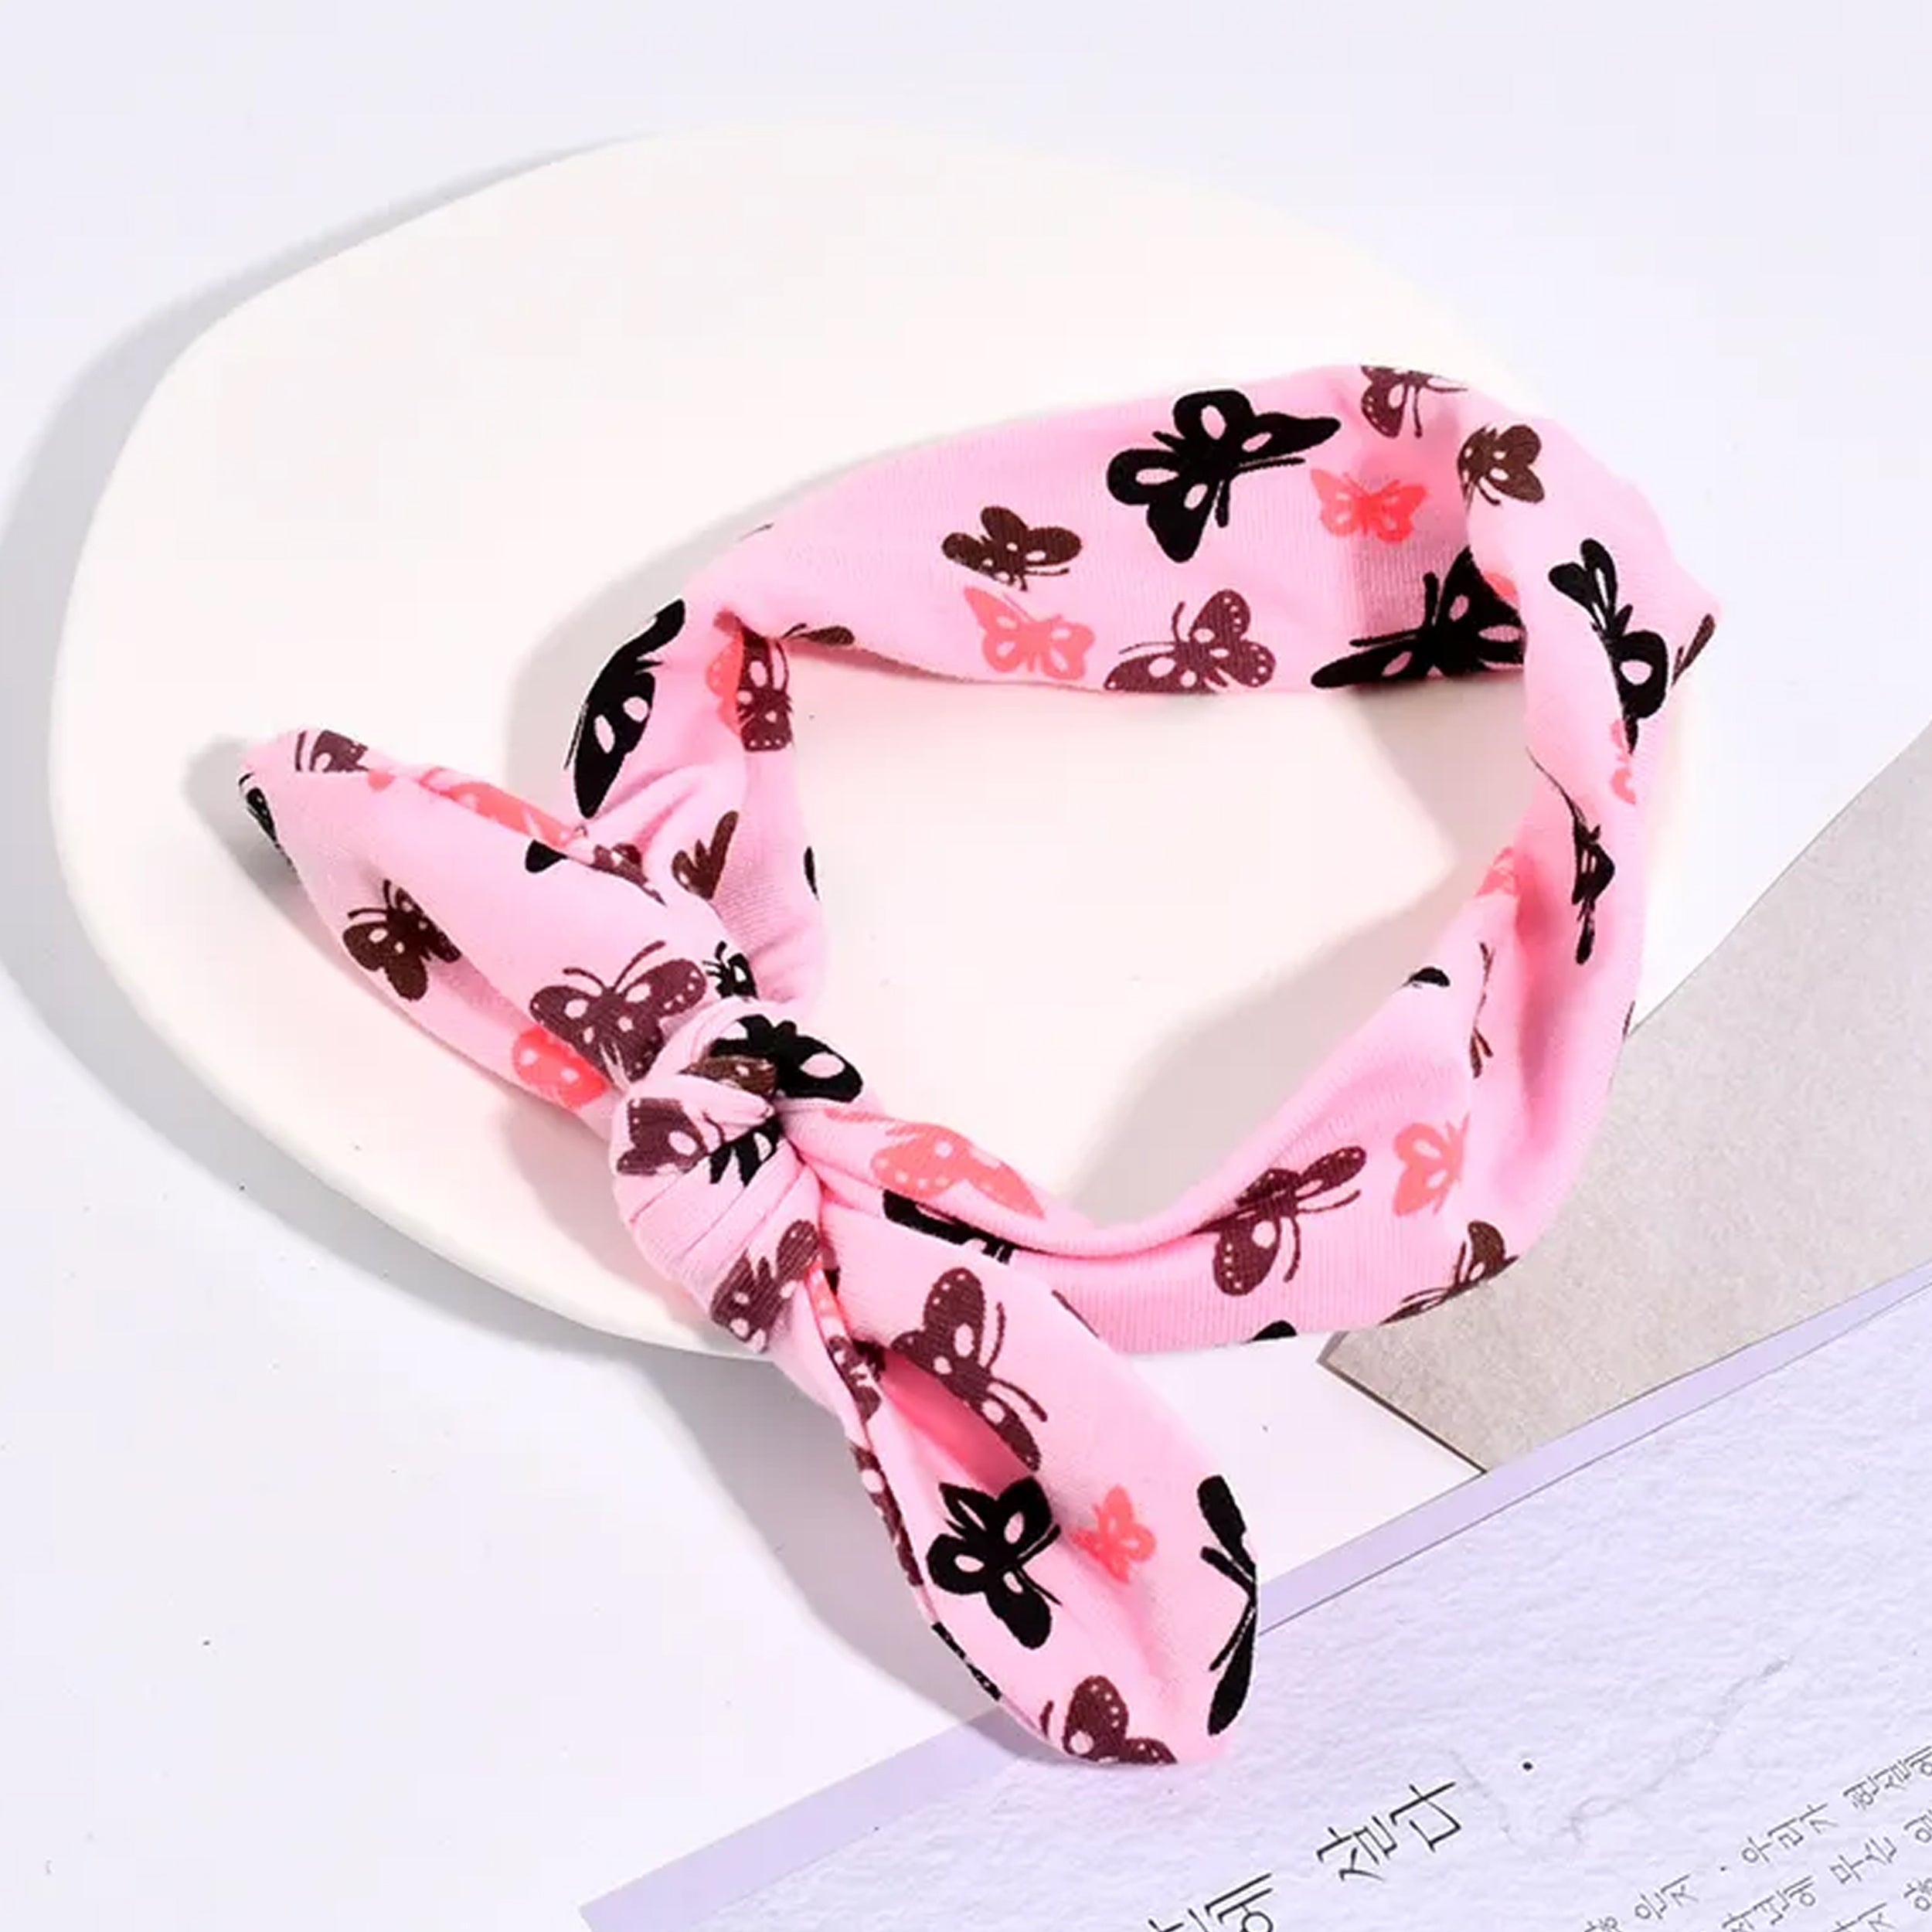 Adorable Printed Rabbit Ears Bow Knot Headband for Baby Girl Gift